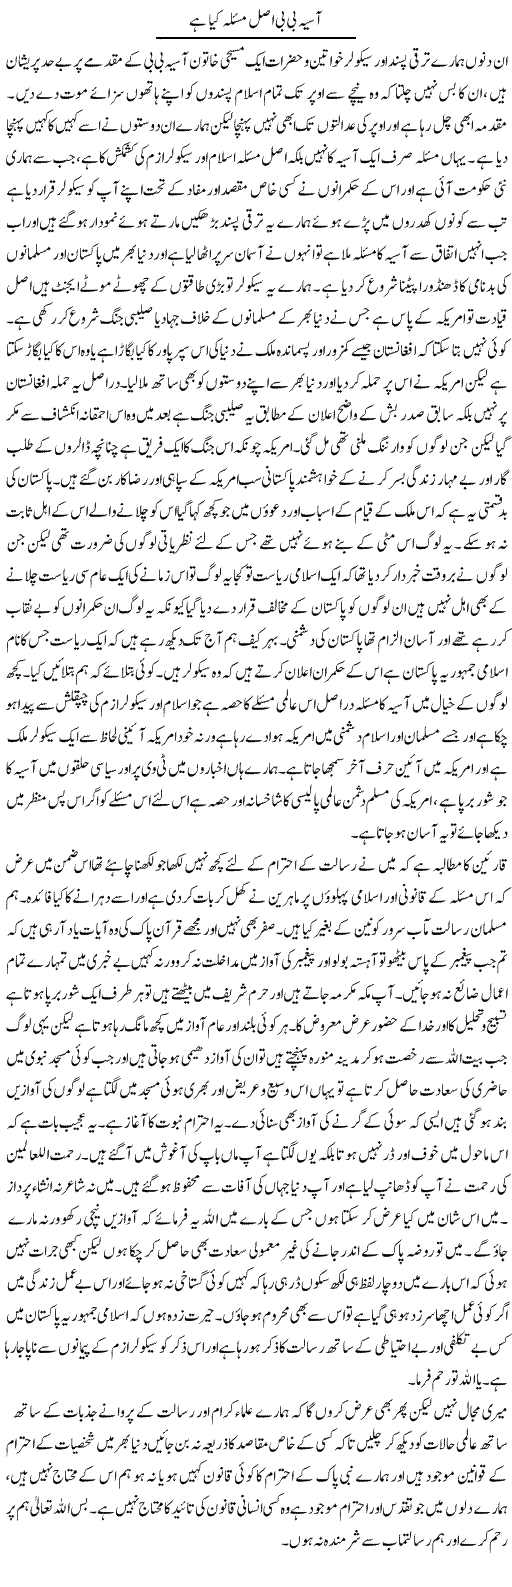 Aasia Bibi Issue Express Column Abdul Qadir 30 November 2010